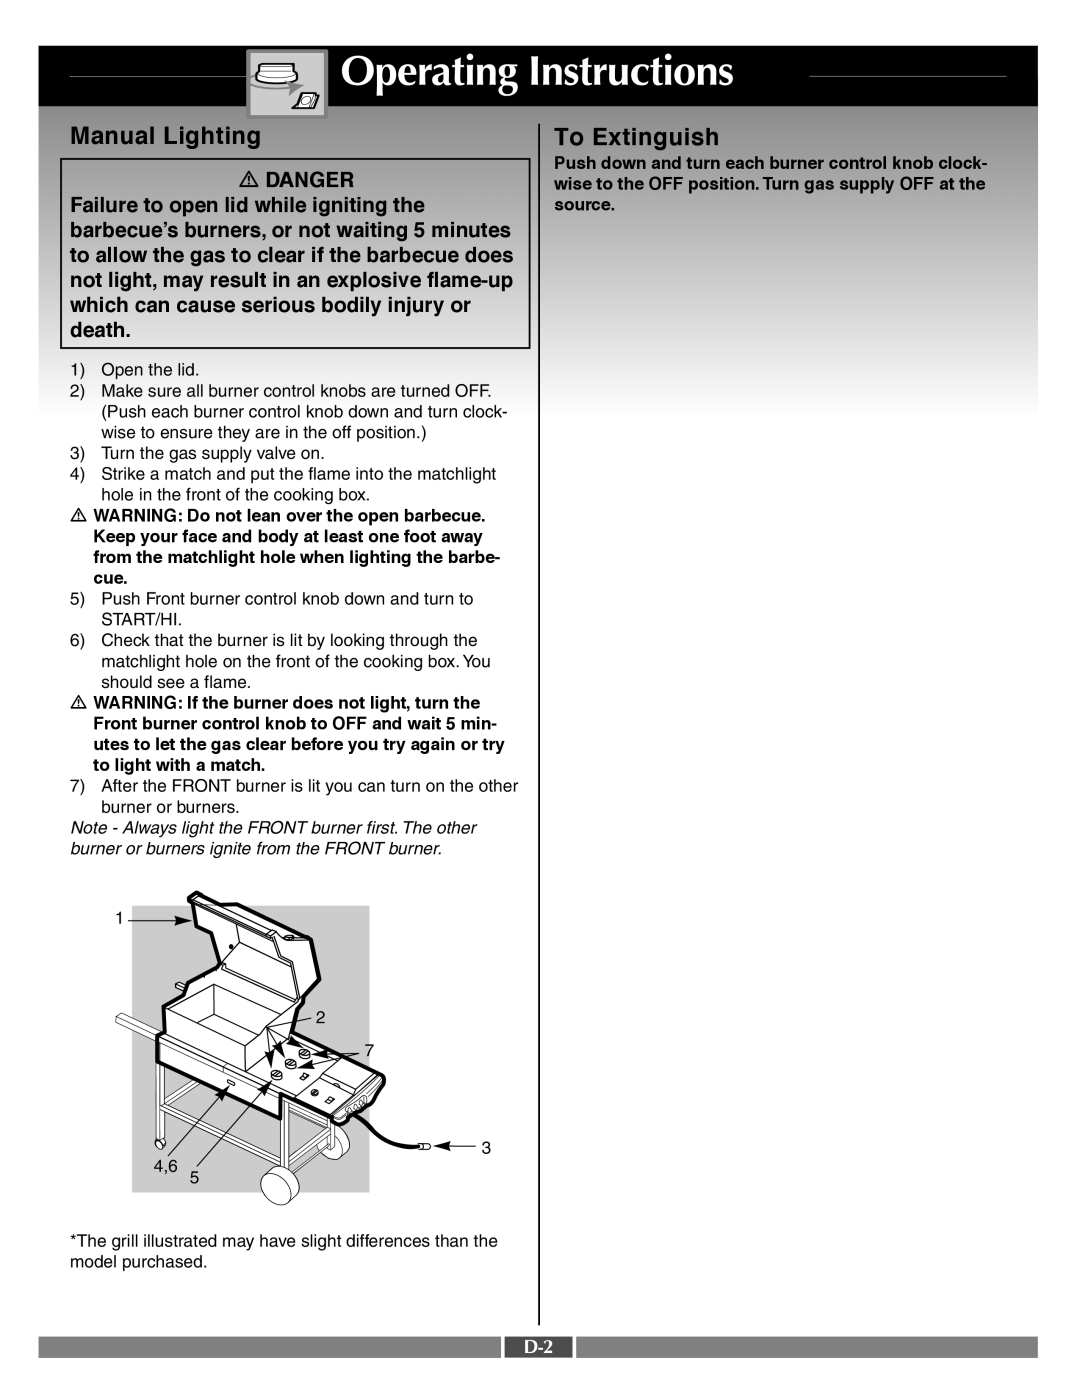 Weber 55556 manual Manual Lighting, Operating Instructions, To Extinguish, Danger 